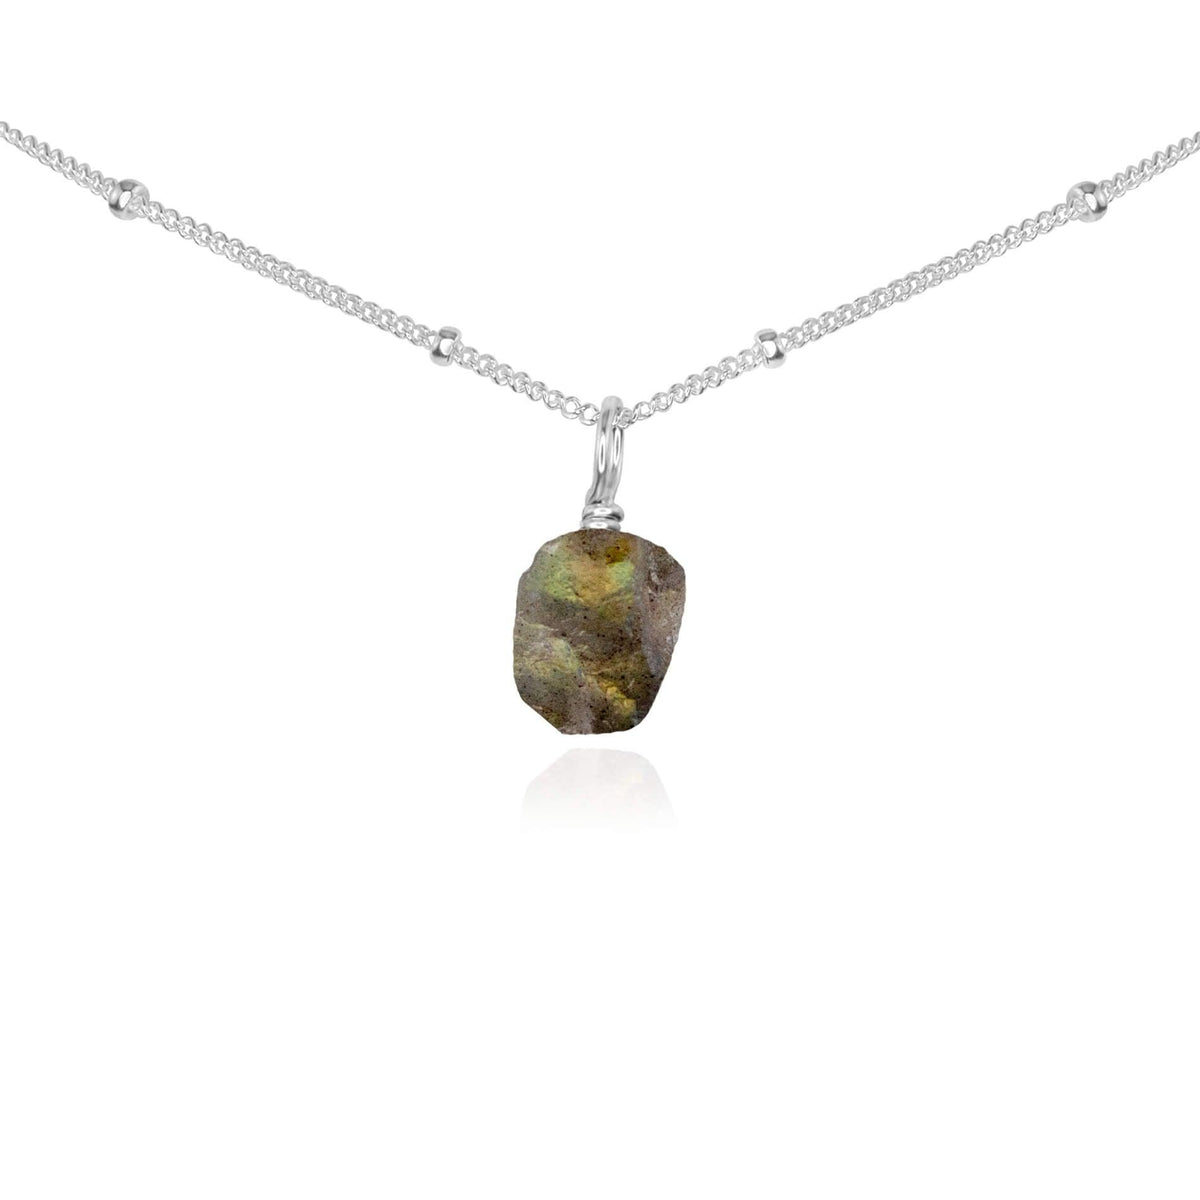 Tiny Rough Labradorite Gemstone Pendant Choker - Tiny Rough Labradorite Gemstone Pendant Choker - Sterling Silver / Satellite - Luna Tide Handmade Crystal Jewellery